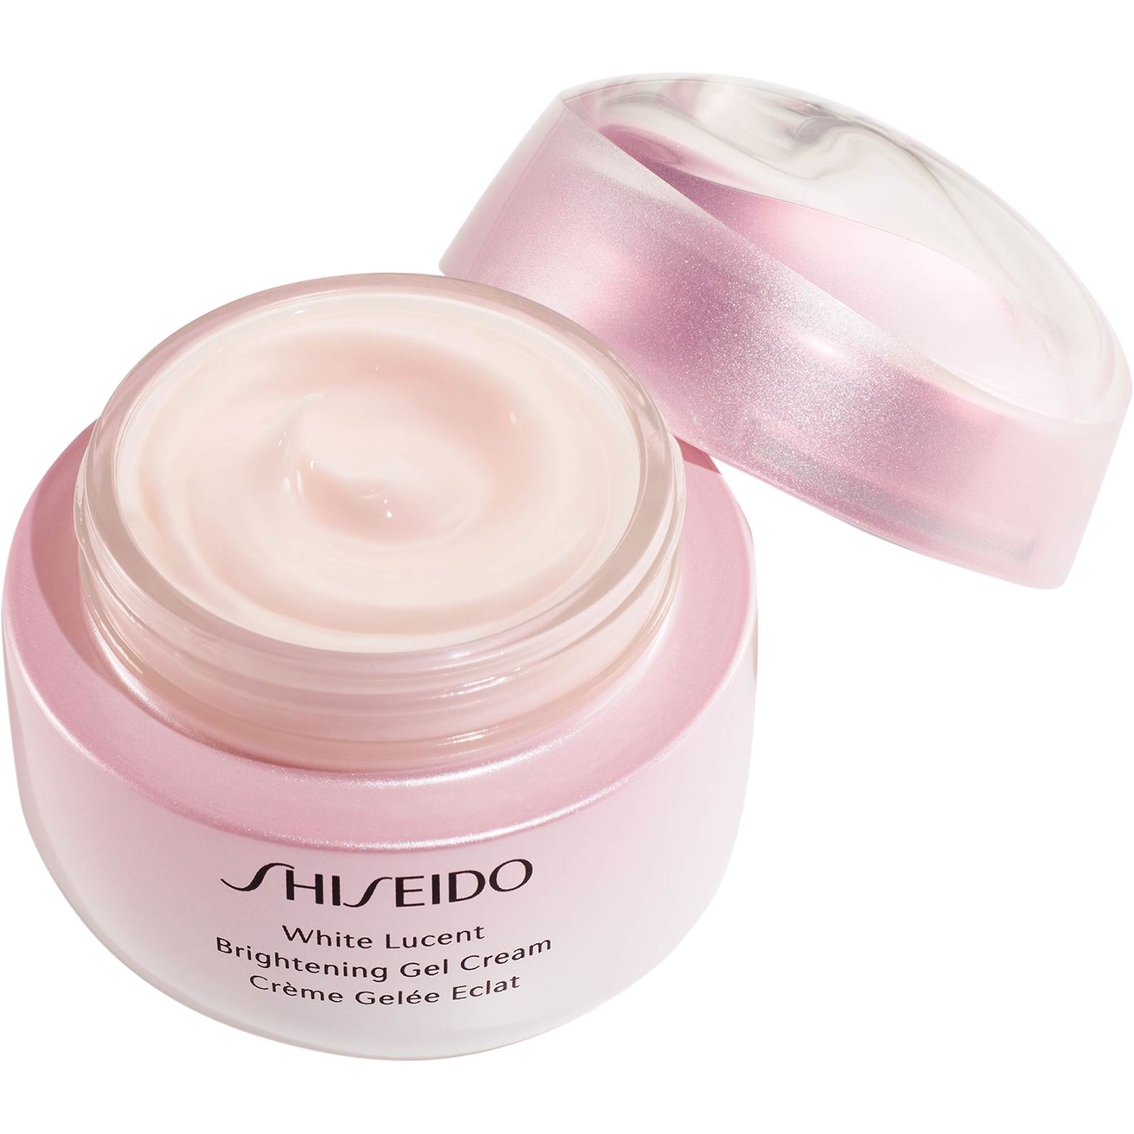 Shiseido White Lucent Brightening Gel Cream - Image 2 of 3